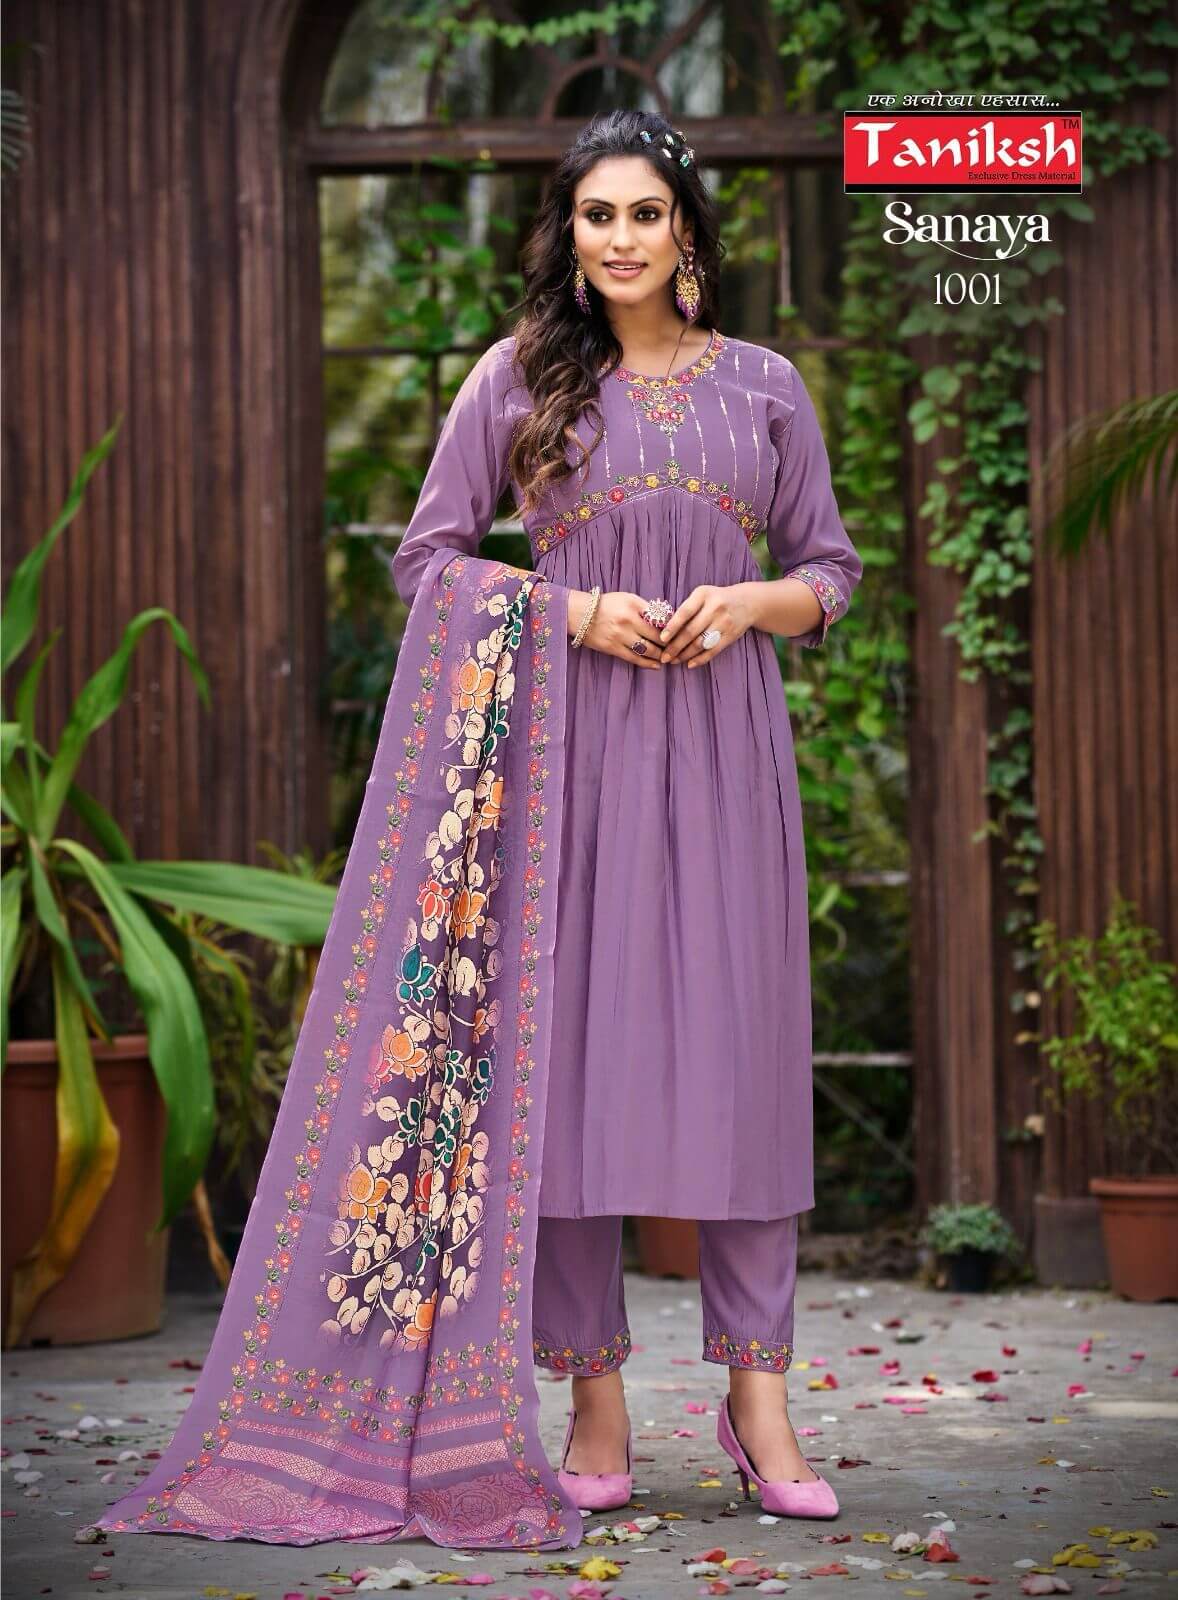 Taniksh Sanaya Vol 1 Alia Cut Readymade Dress Catalog collection 7